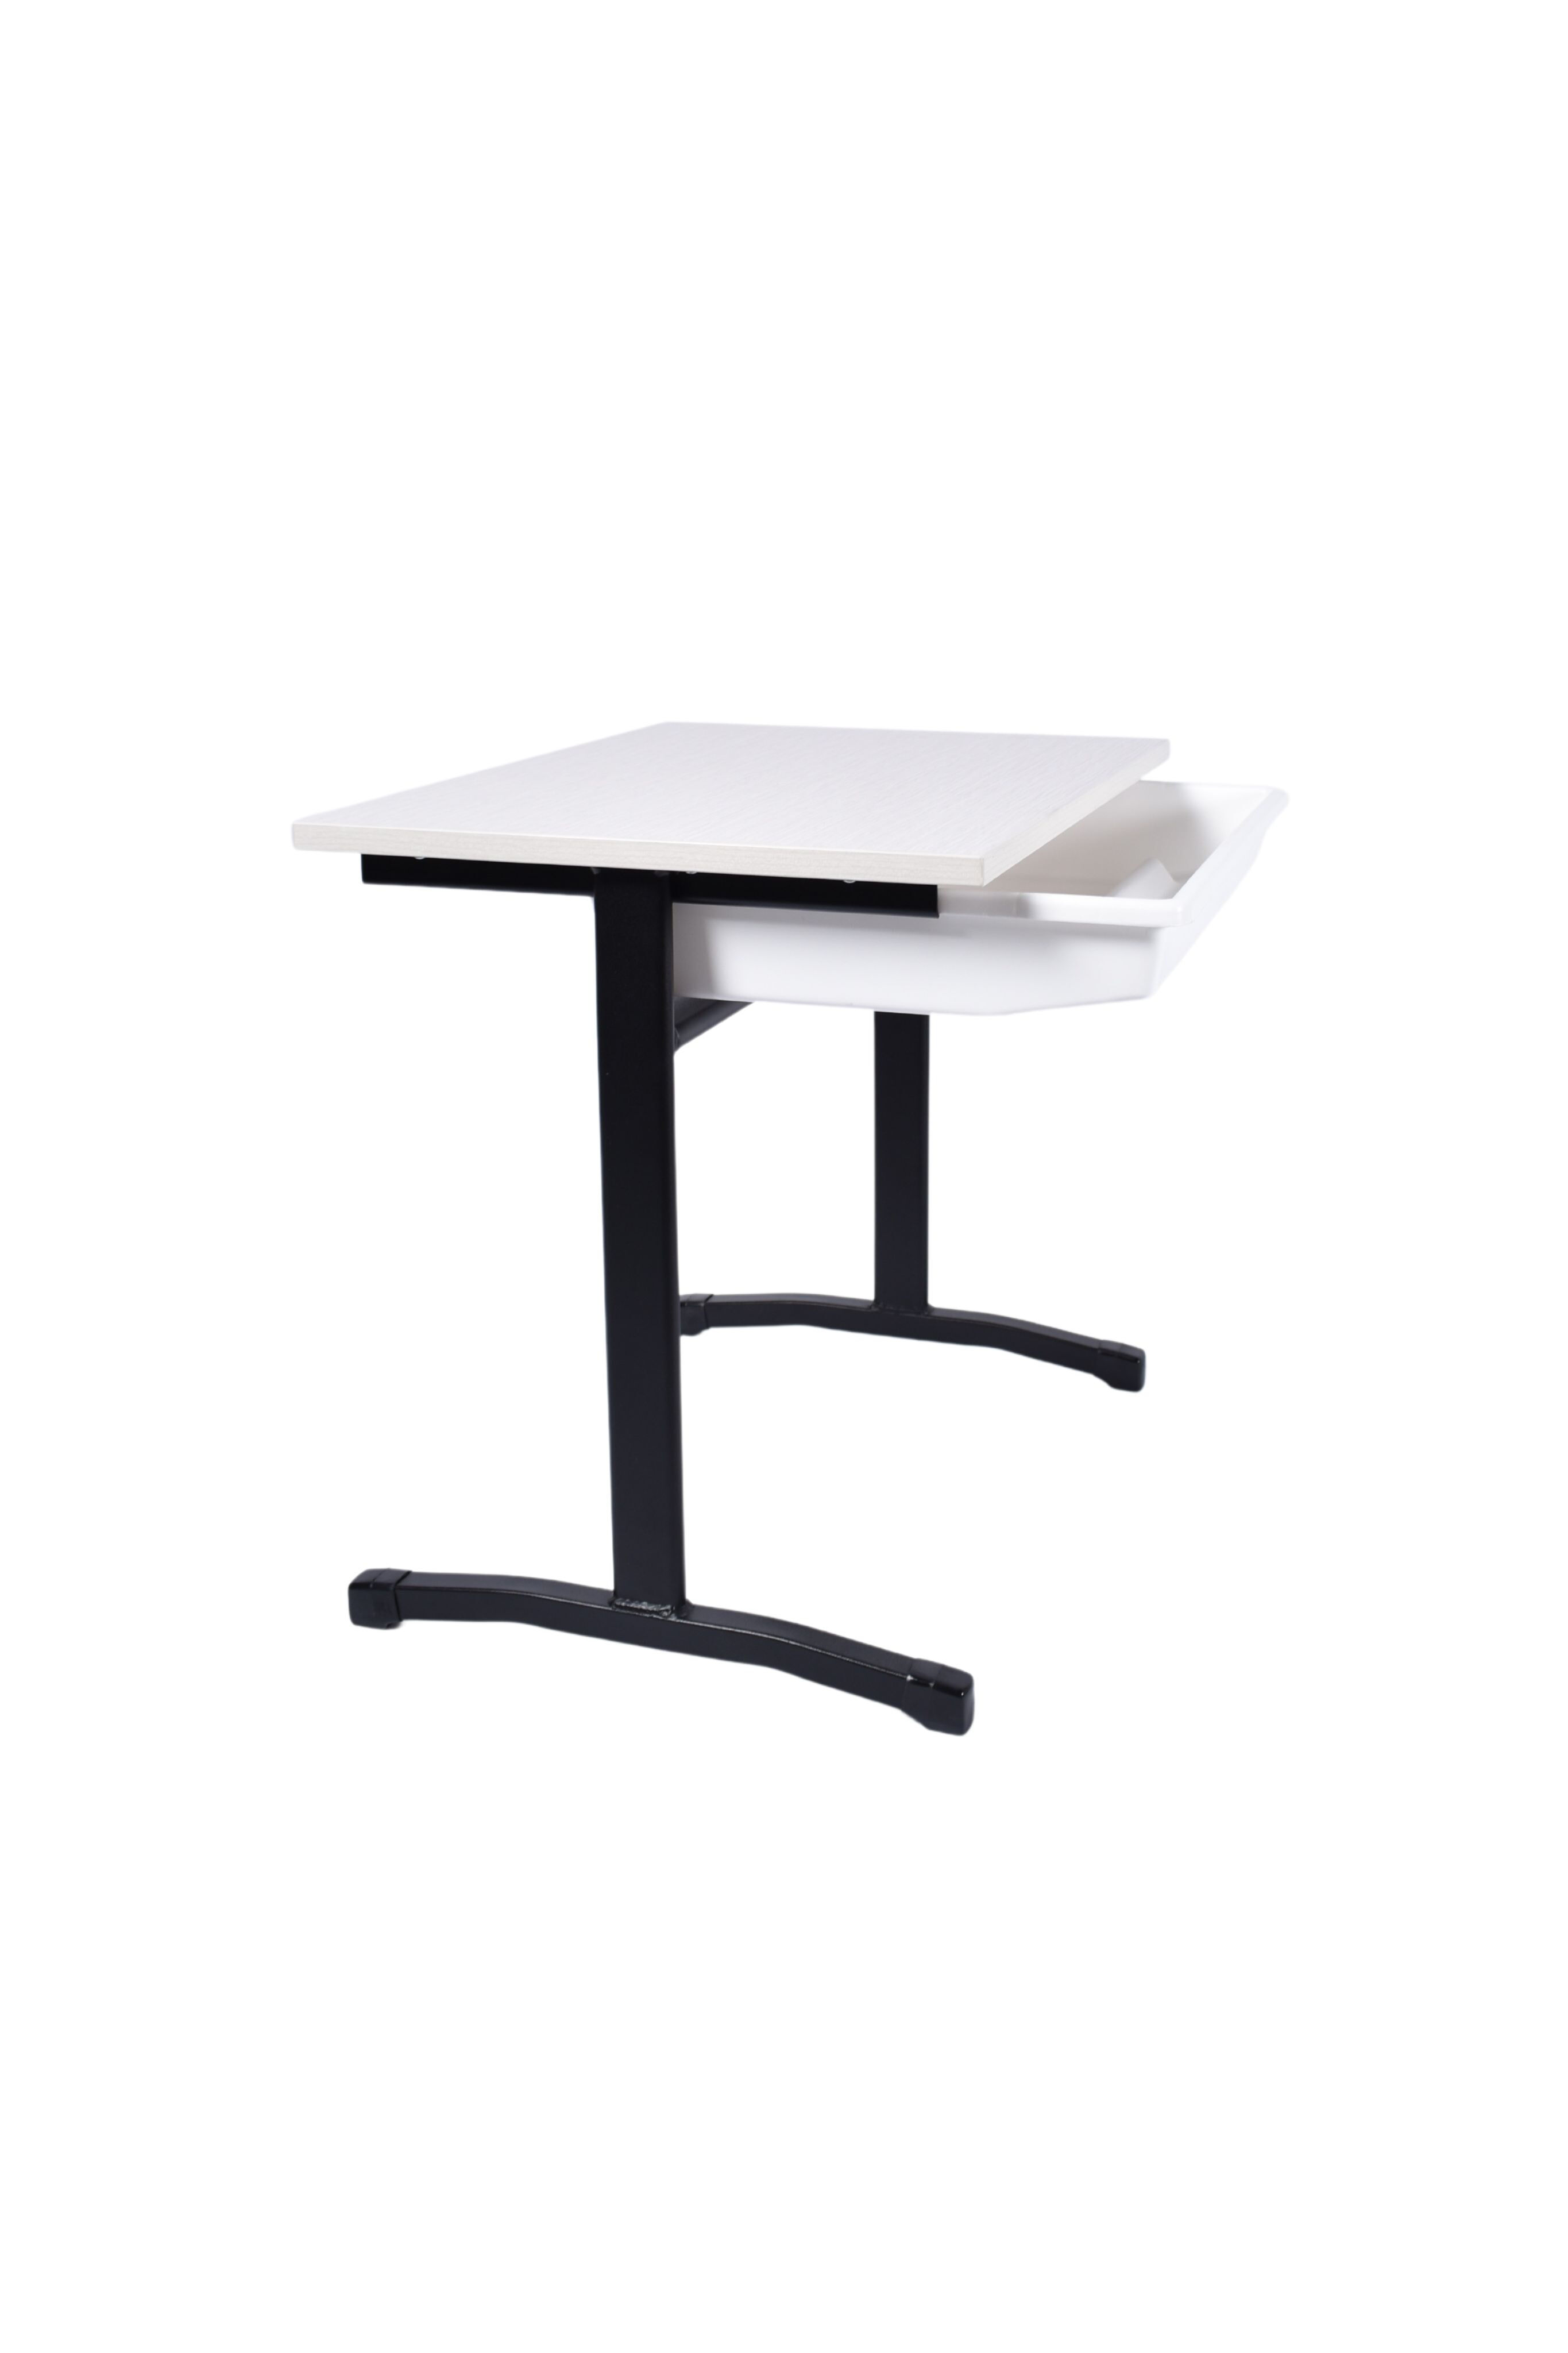 'SASSY' T-Frame Fixed Height Student Desk 1